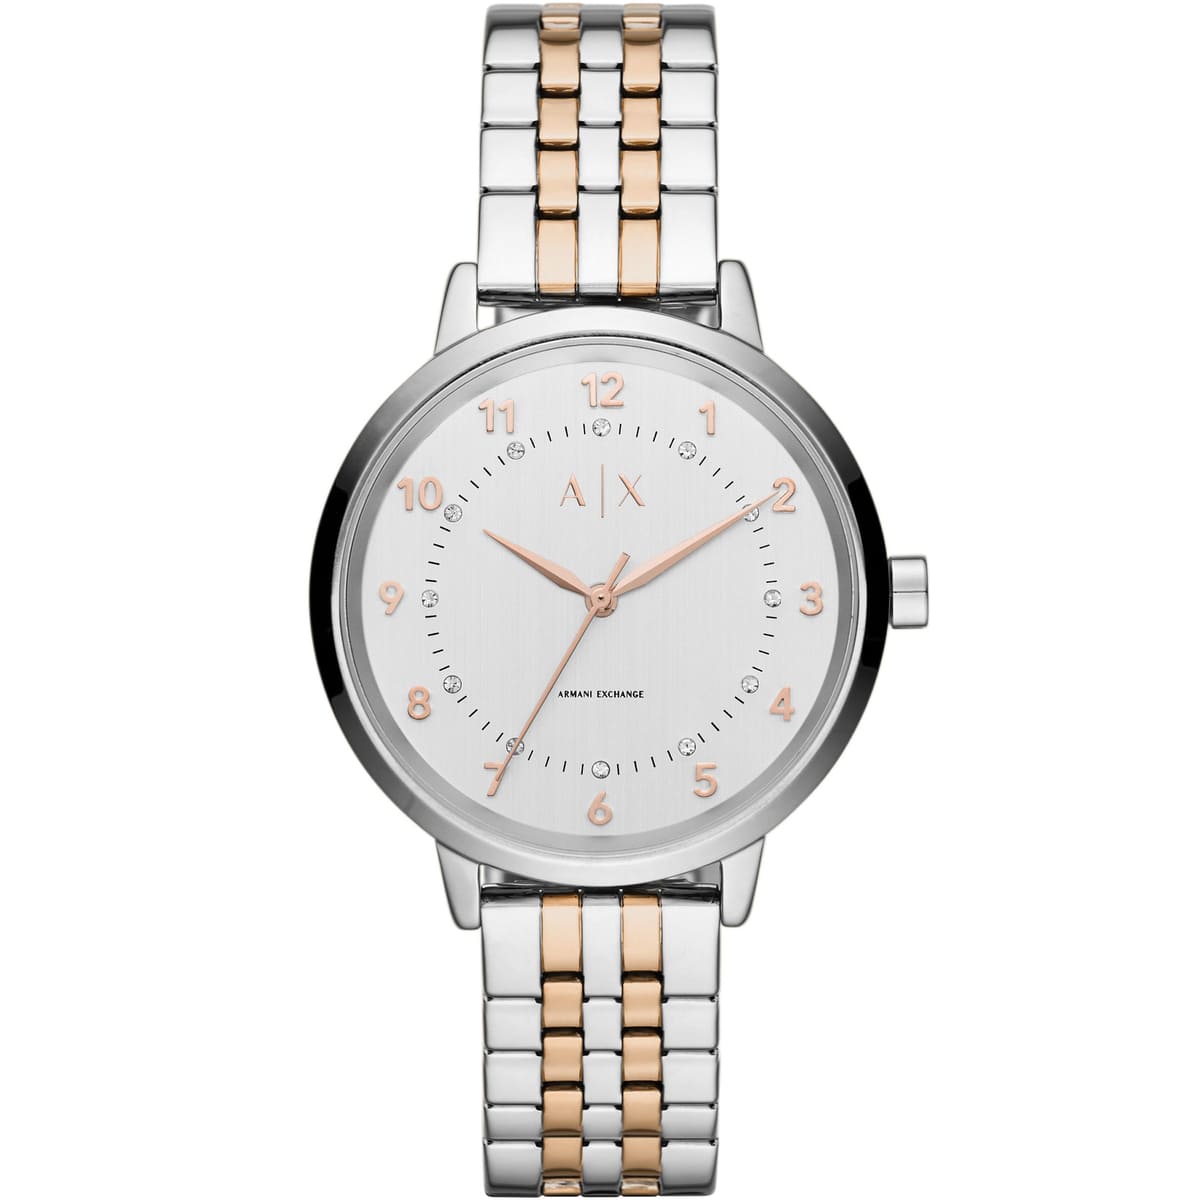 Exchange Payton Armani Watches Ladies | Prime Watch AX5370